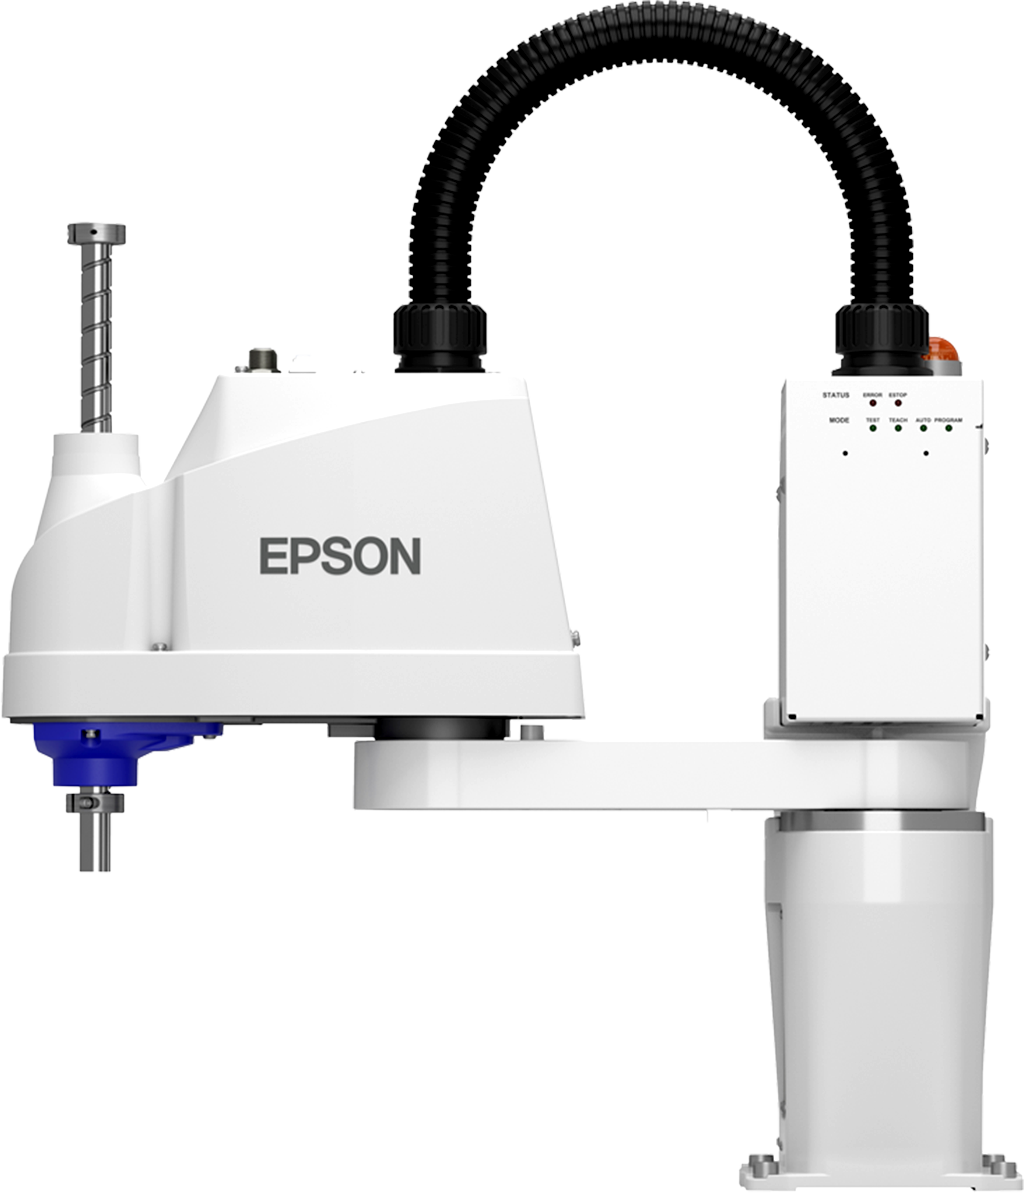 Epson robot product